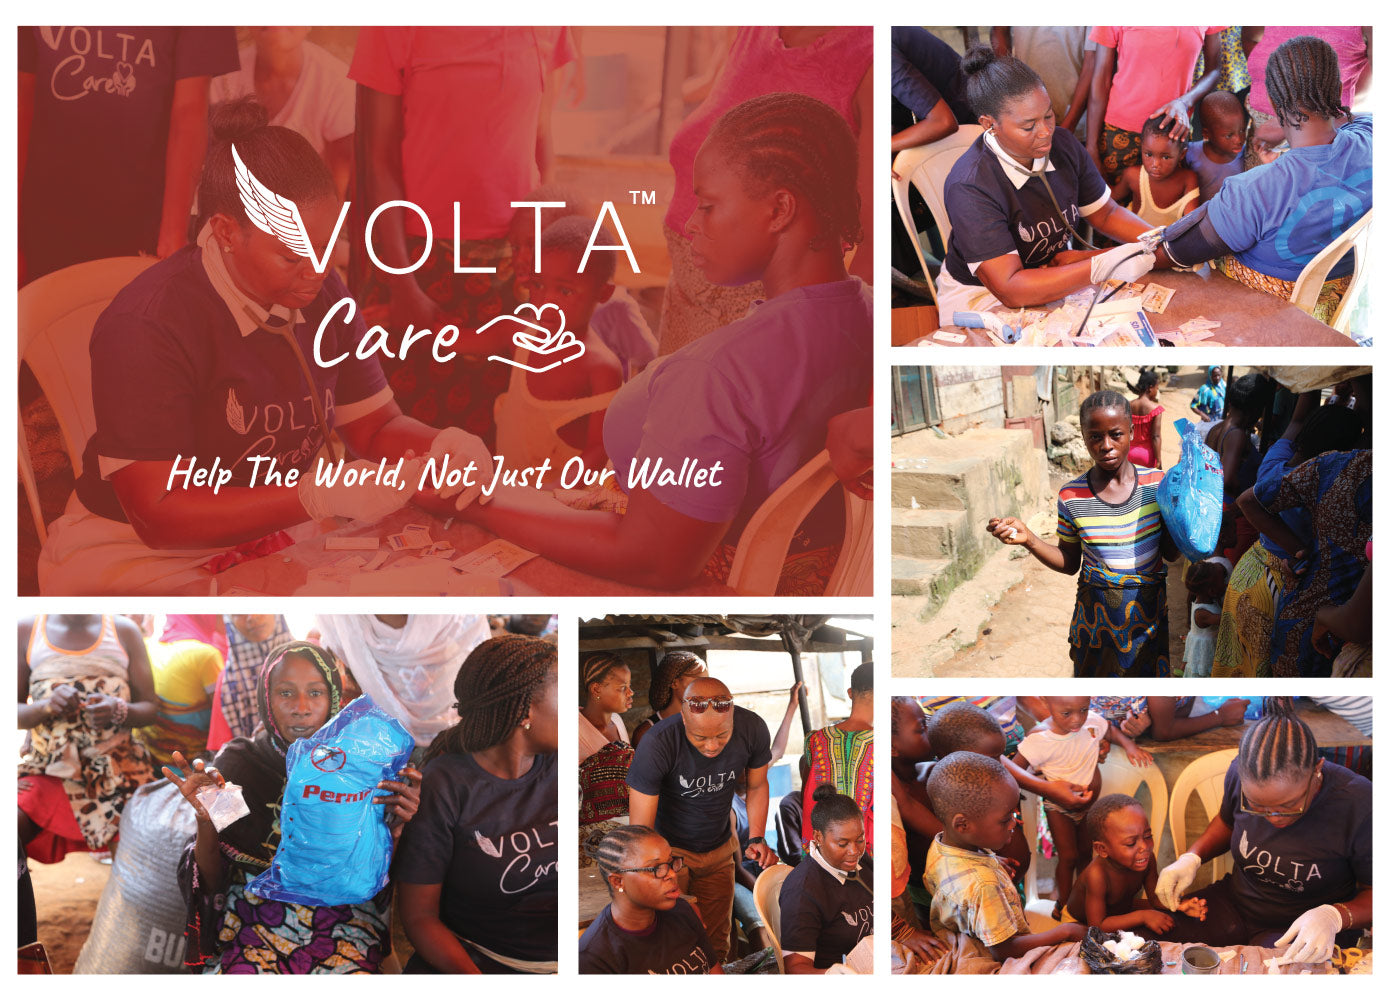 The Volta Mission